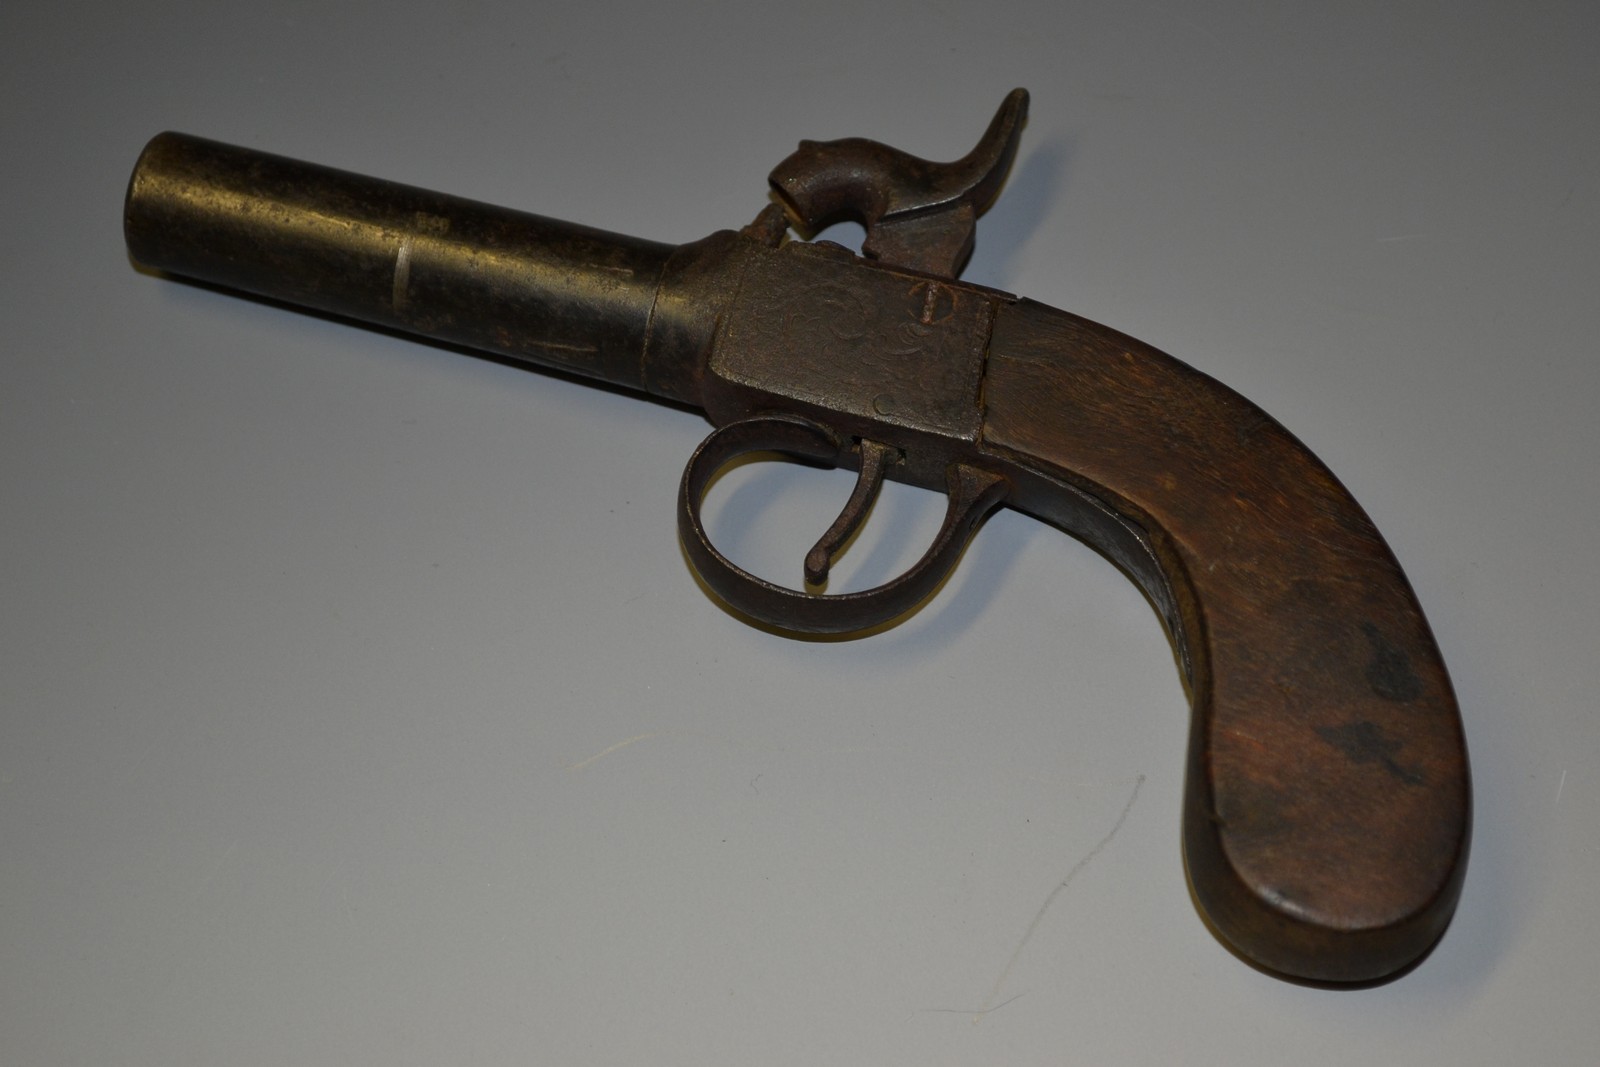 A 19th century percussion pocket pistol, 6.